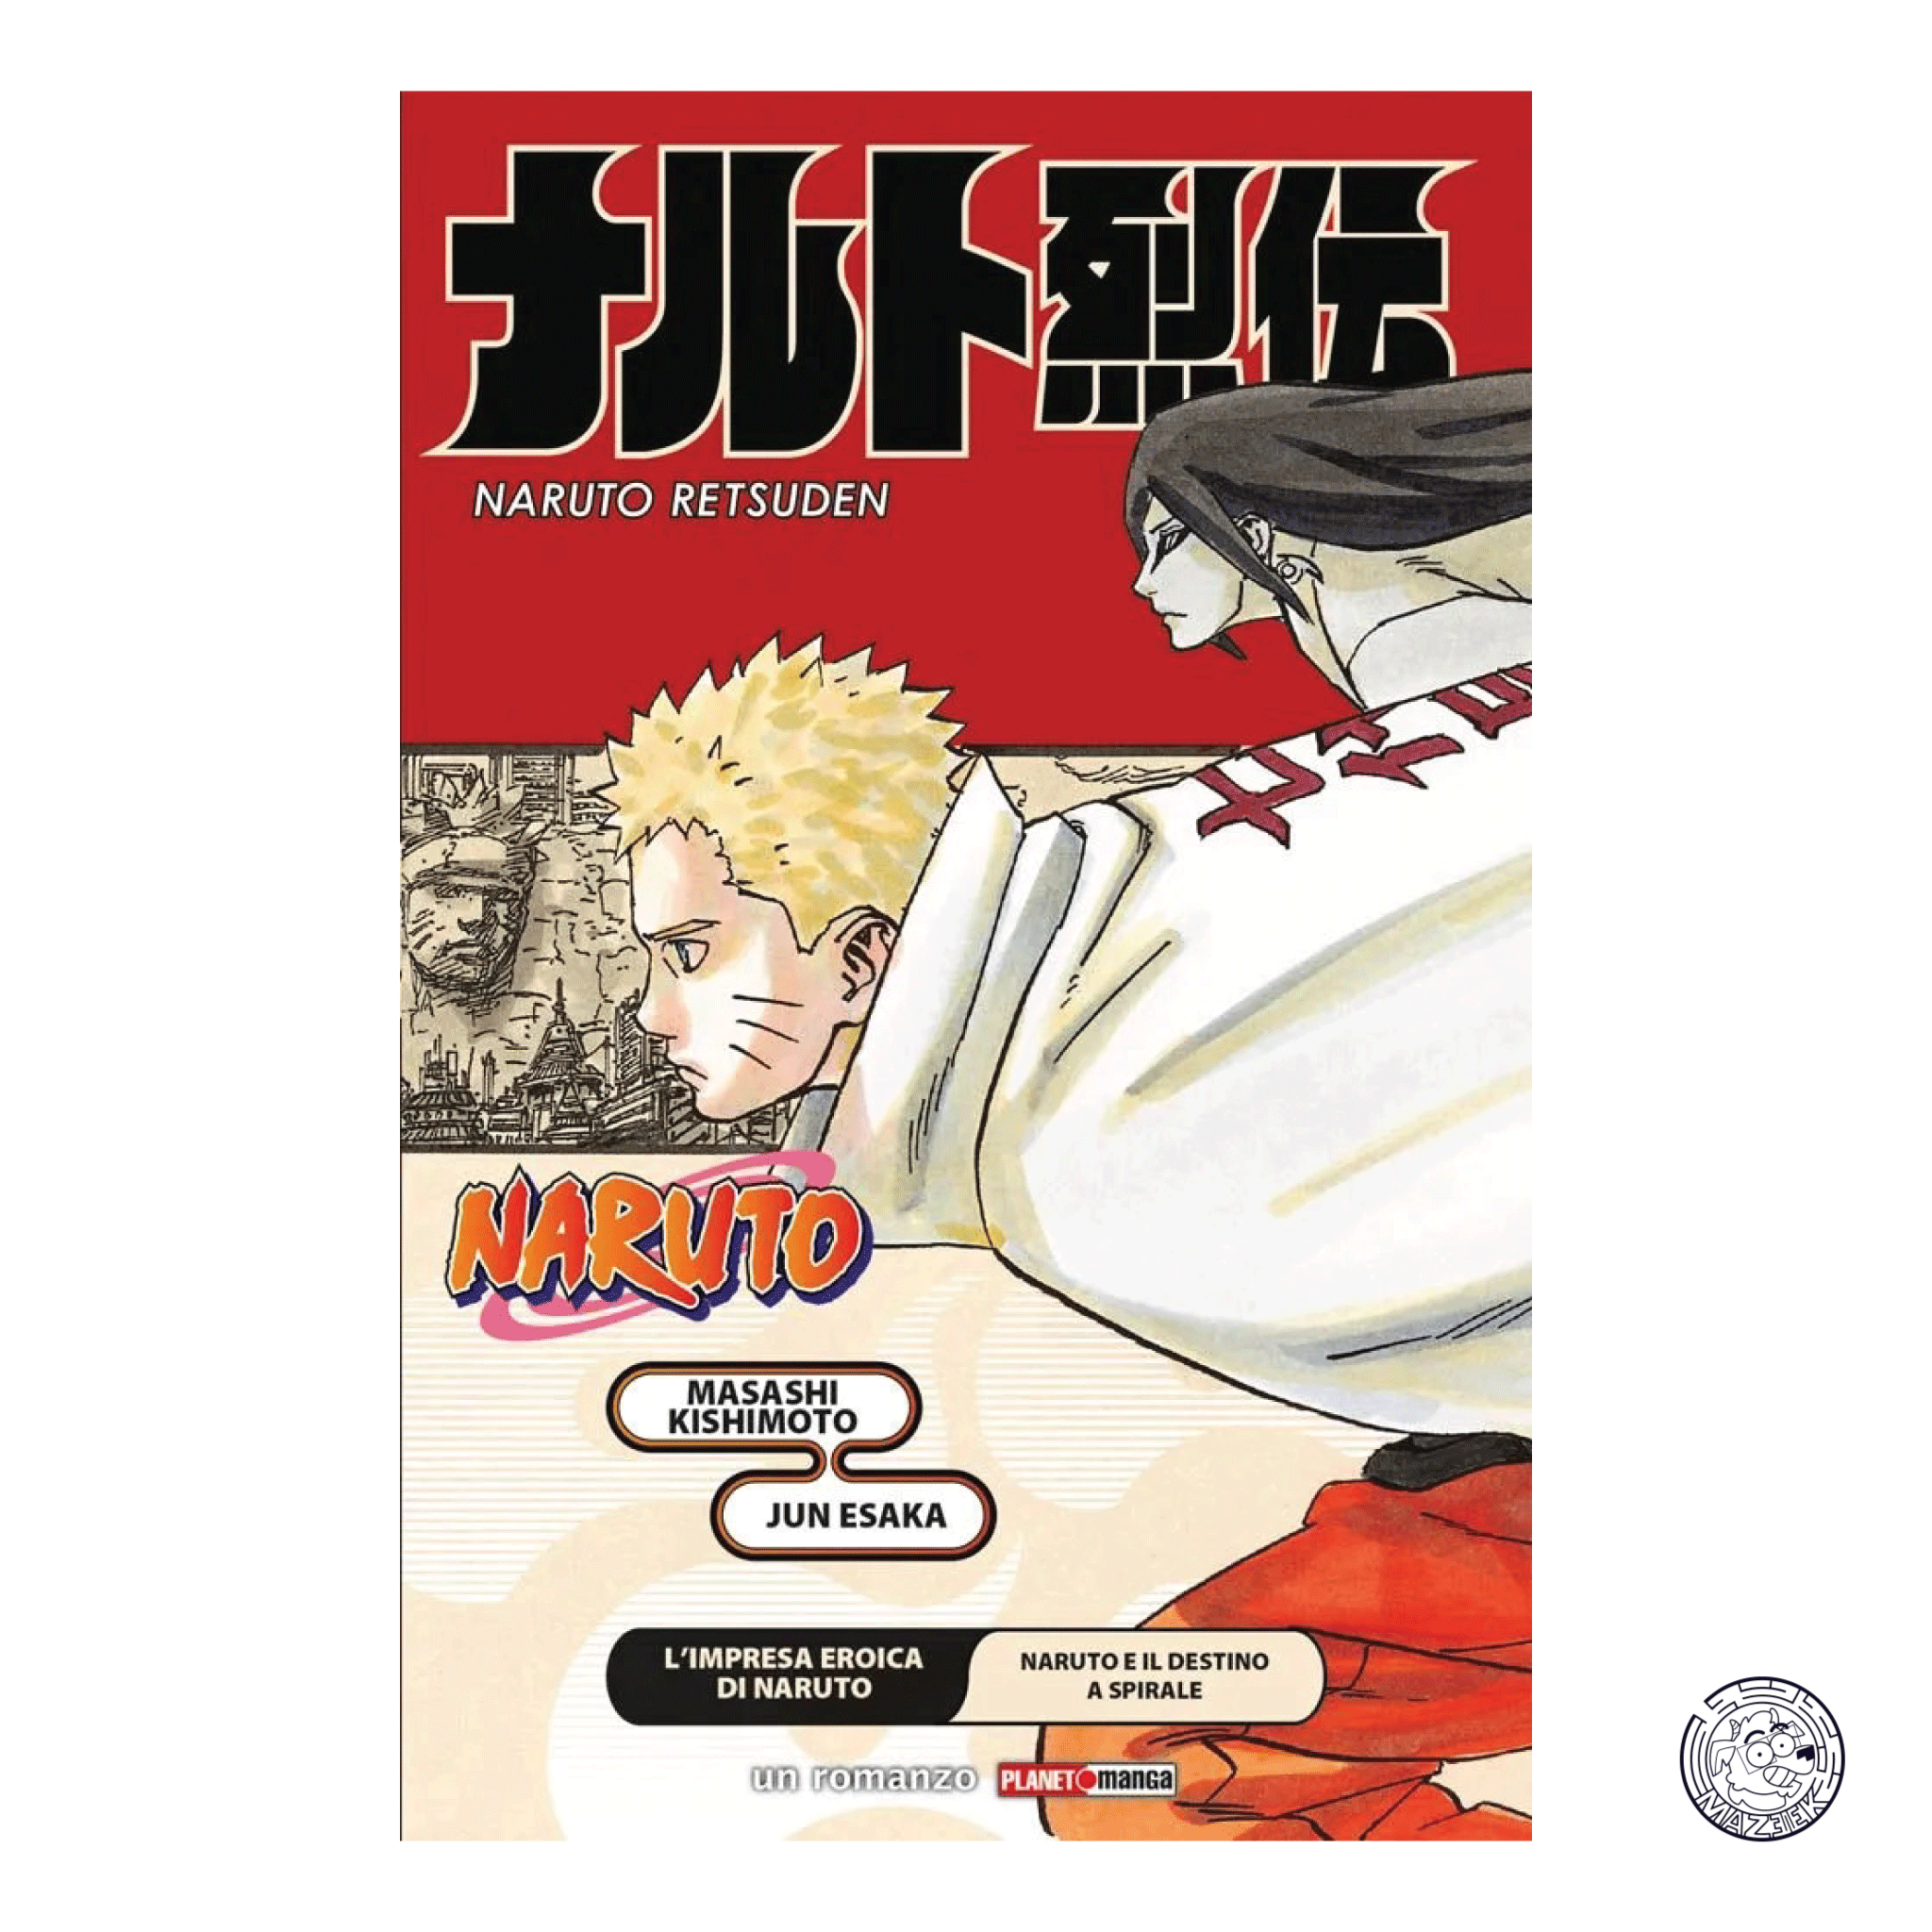 Naruto Novel The Heroic Quest of Naruto